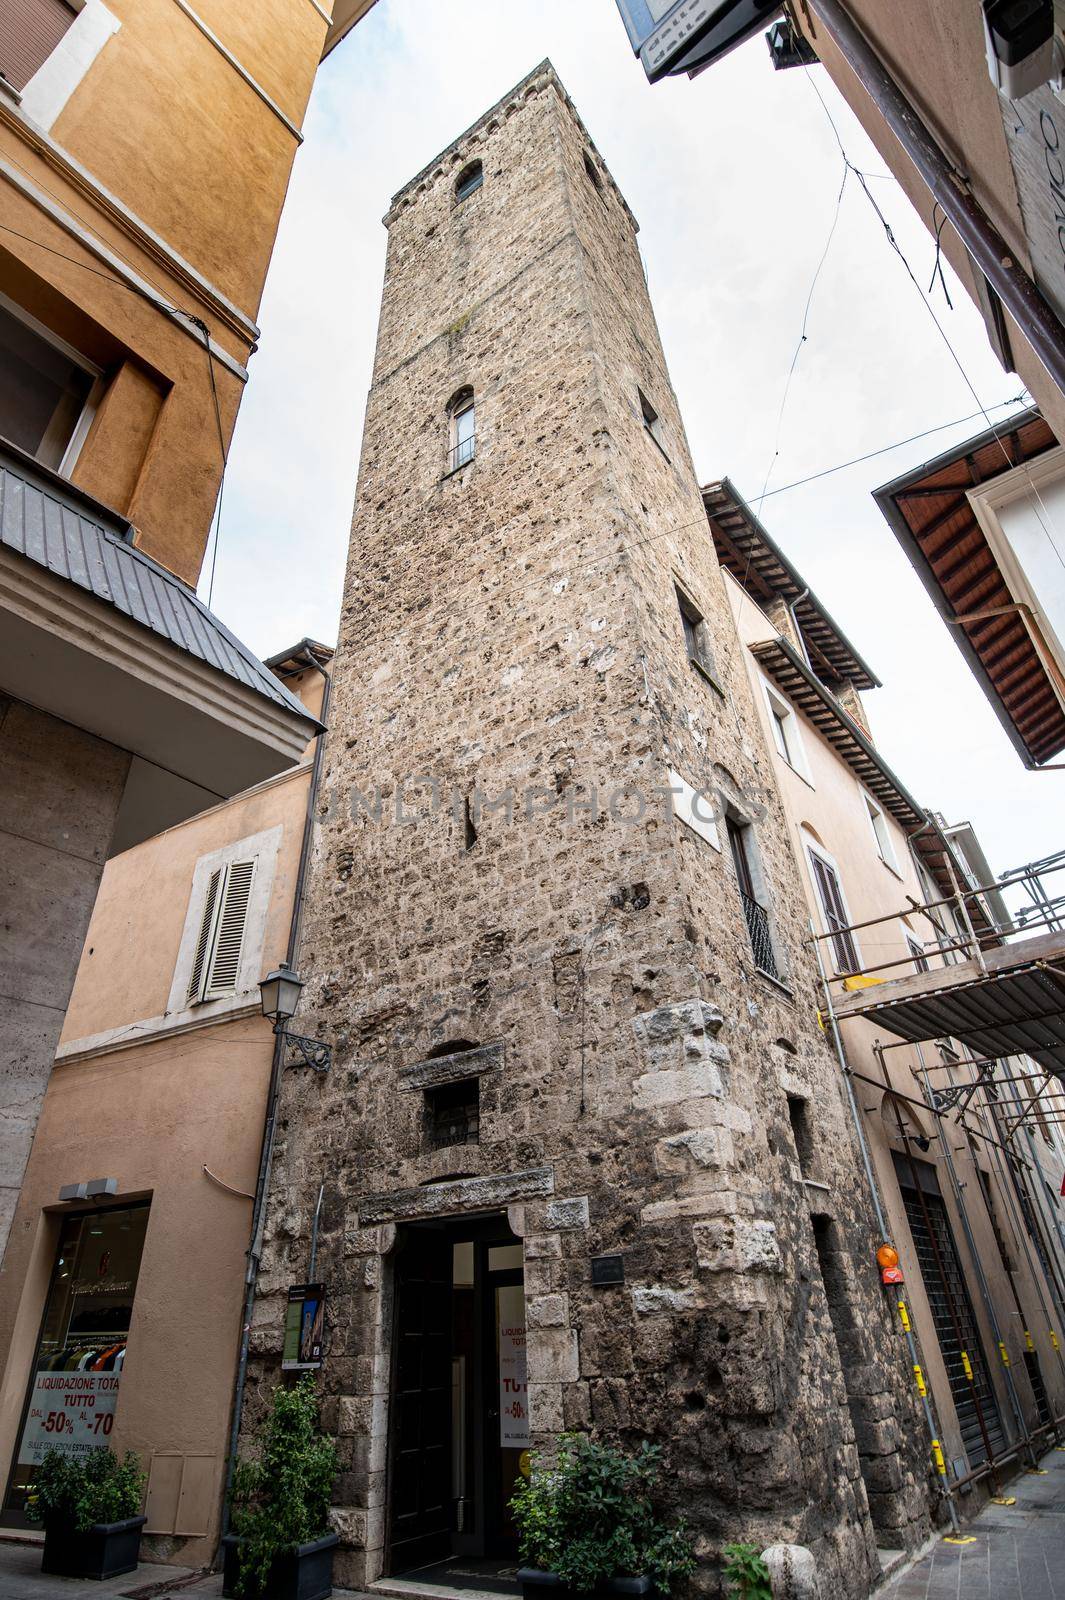 terni,italy july 07 2021:barberini tower in via roma in the historic center of the city